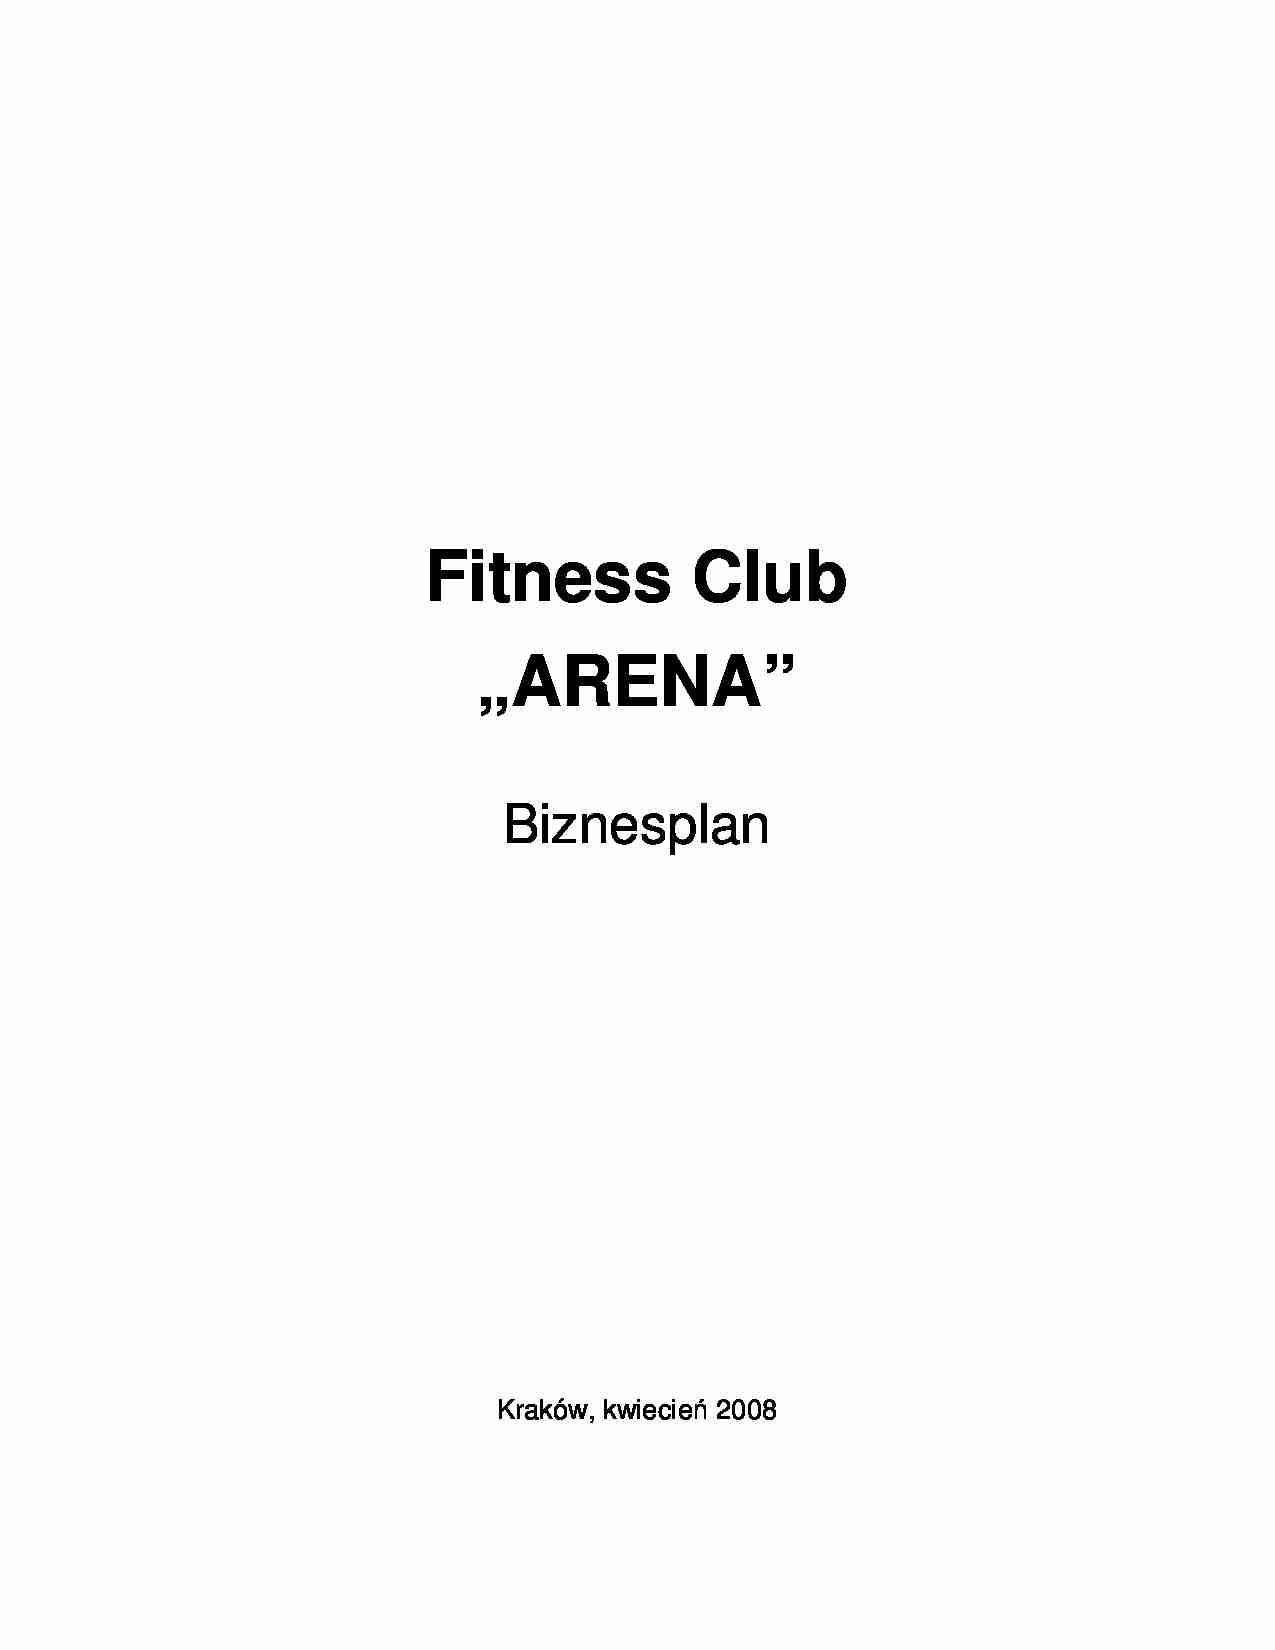 biznes plan - fitnes klubu - strona 1